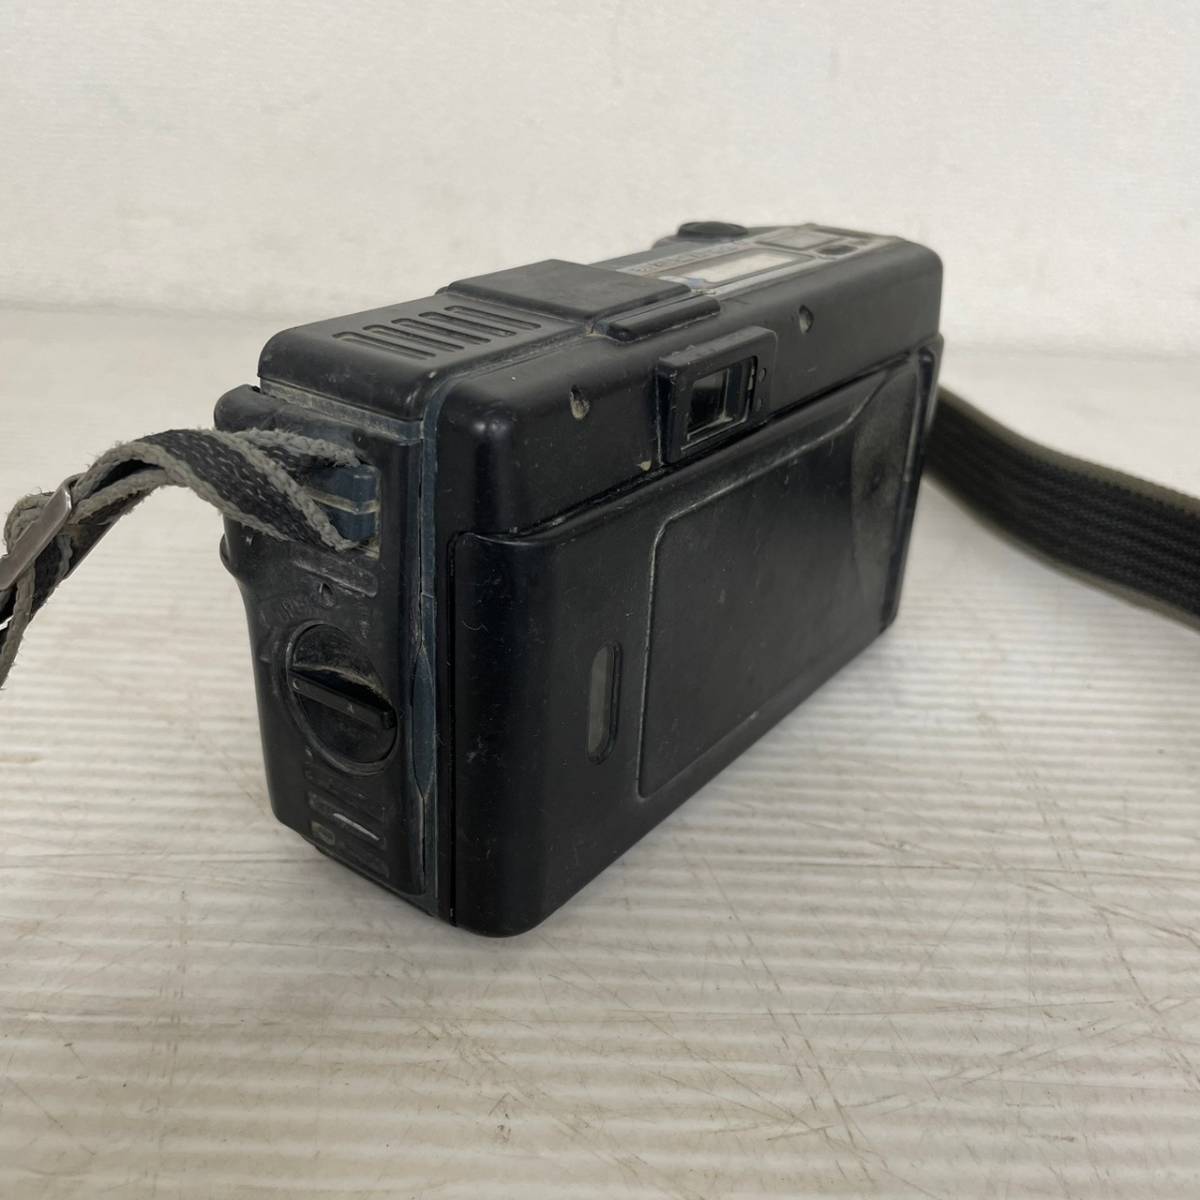 【Konica】コニカ コンパクトカメラ LENS 35 2台セット ジャンク品_画像8